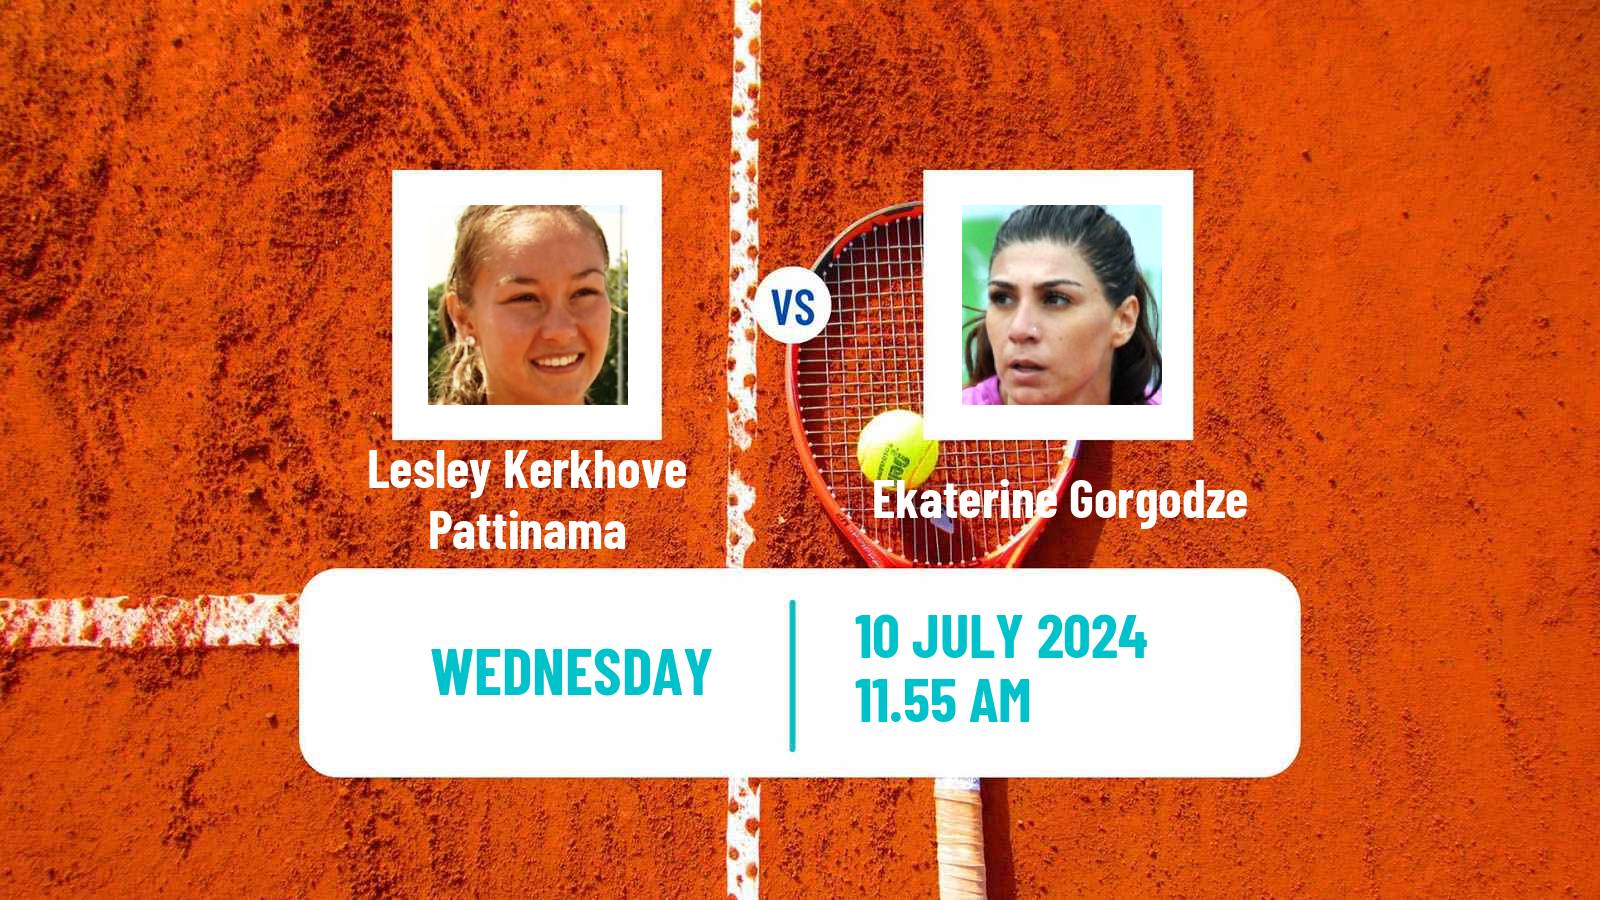 Tennis ITF W75 The Hague Women Lesley Kerkhove Pattinama - Ekaterine Gorgodze